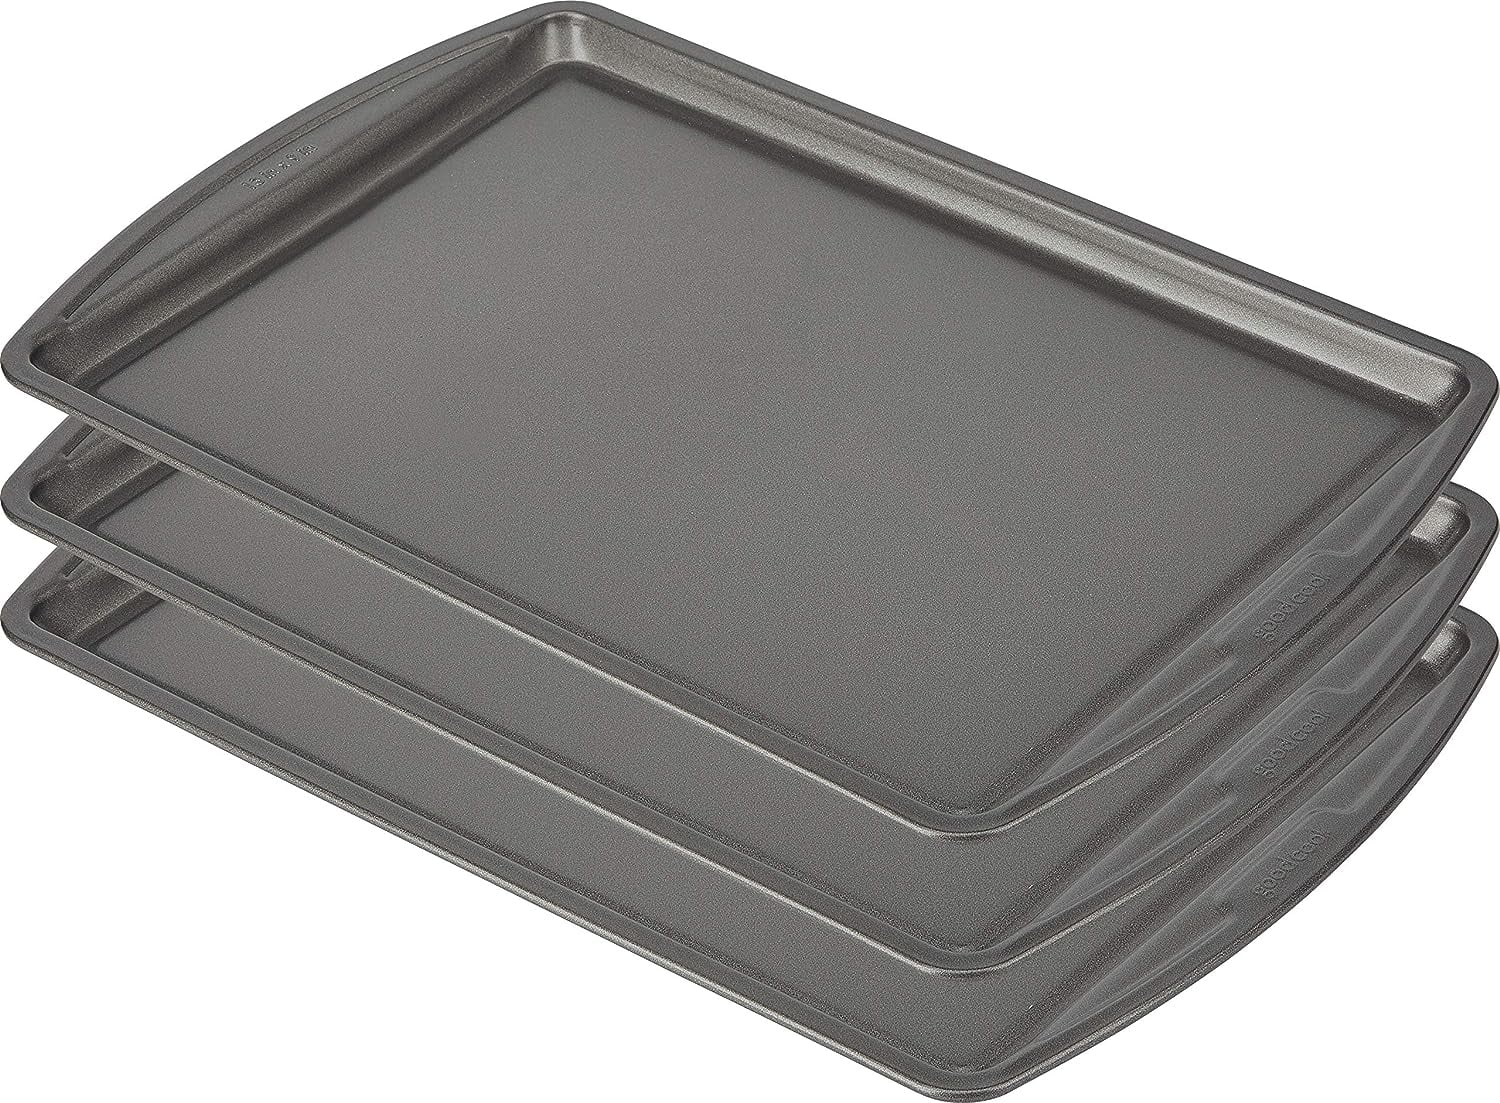 Mainstays Gray Covered Nonstick 17.3 x 12.5 x 1 Half Sheet Pan,  Multi-Purpose, Jelly Roll Pan